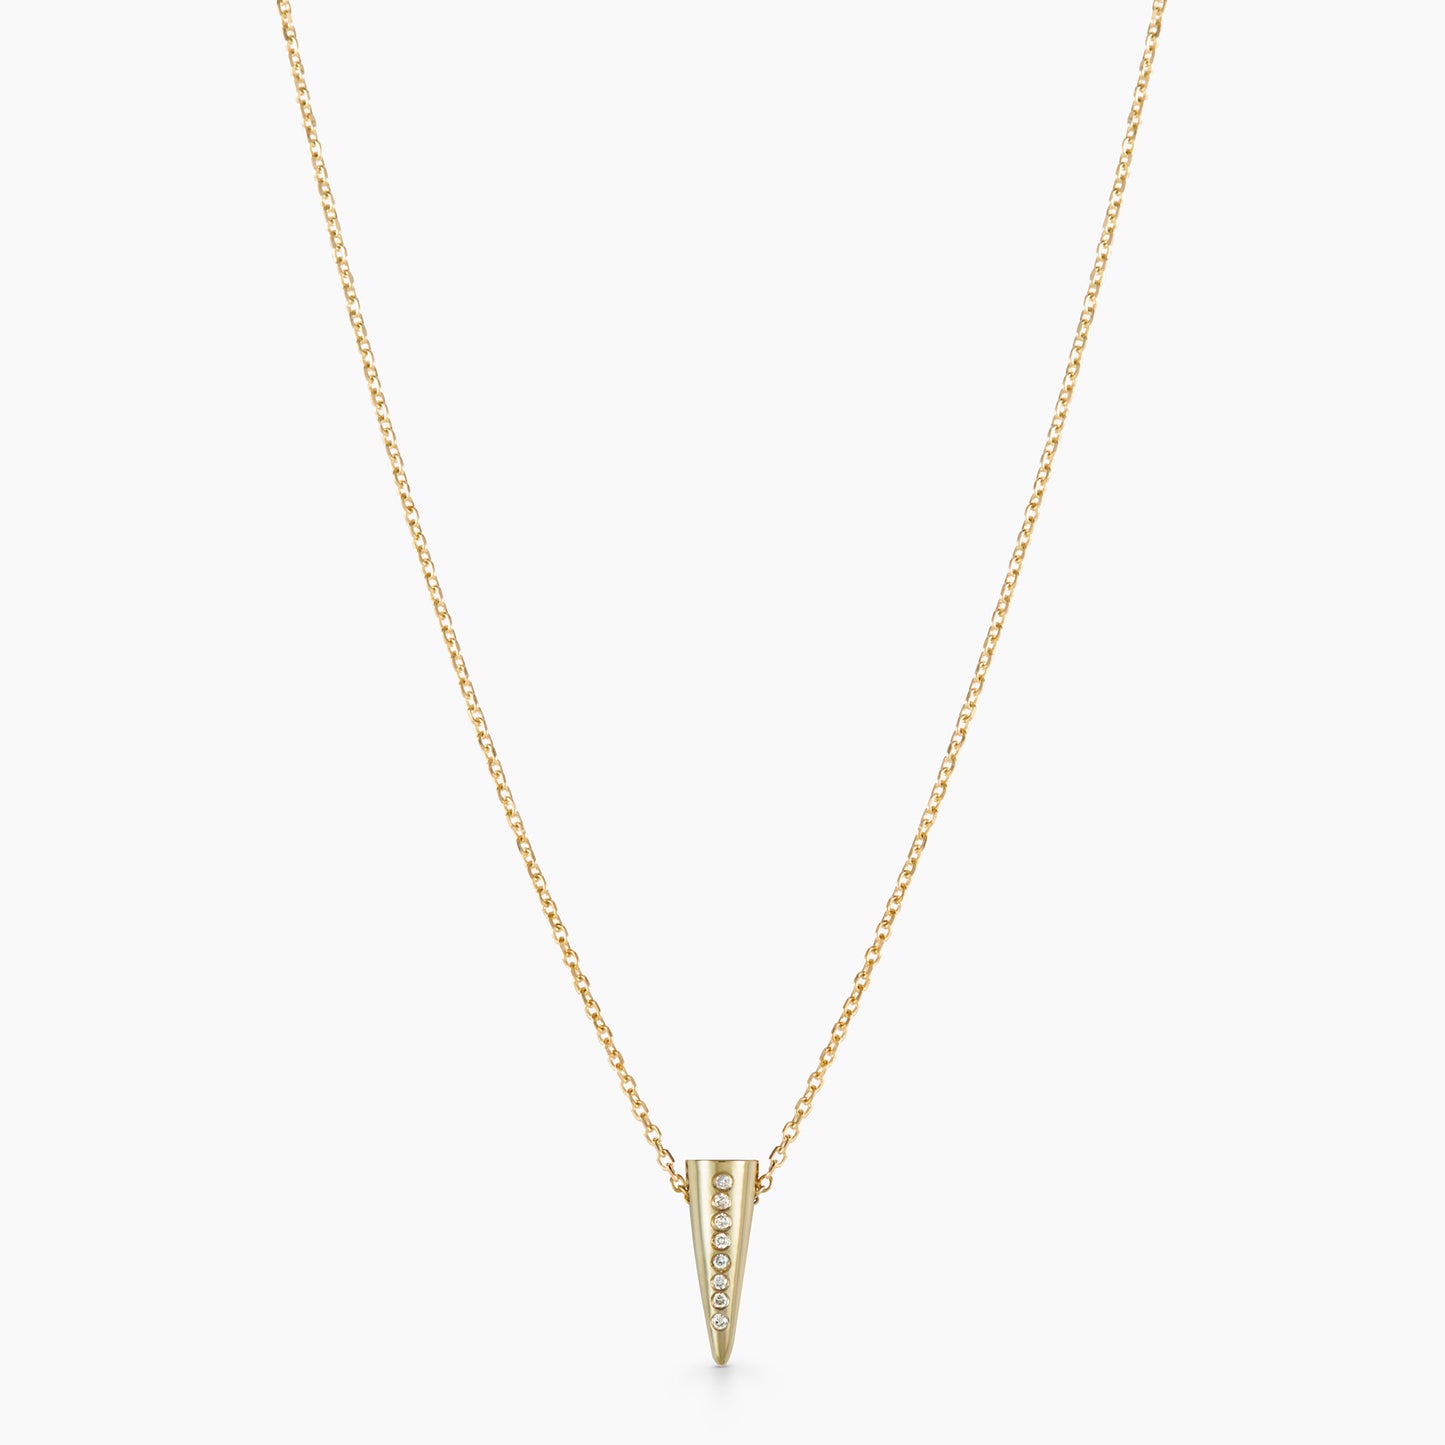 Tusk necklace with diamonds version 2 (verticle diamonds)